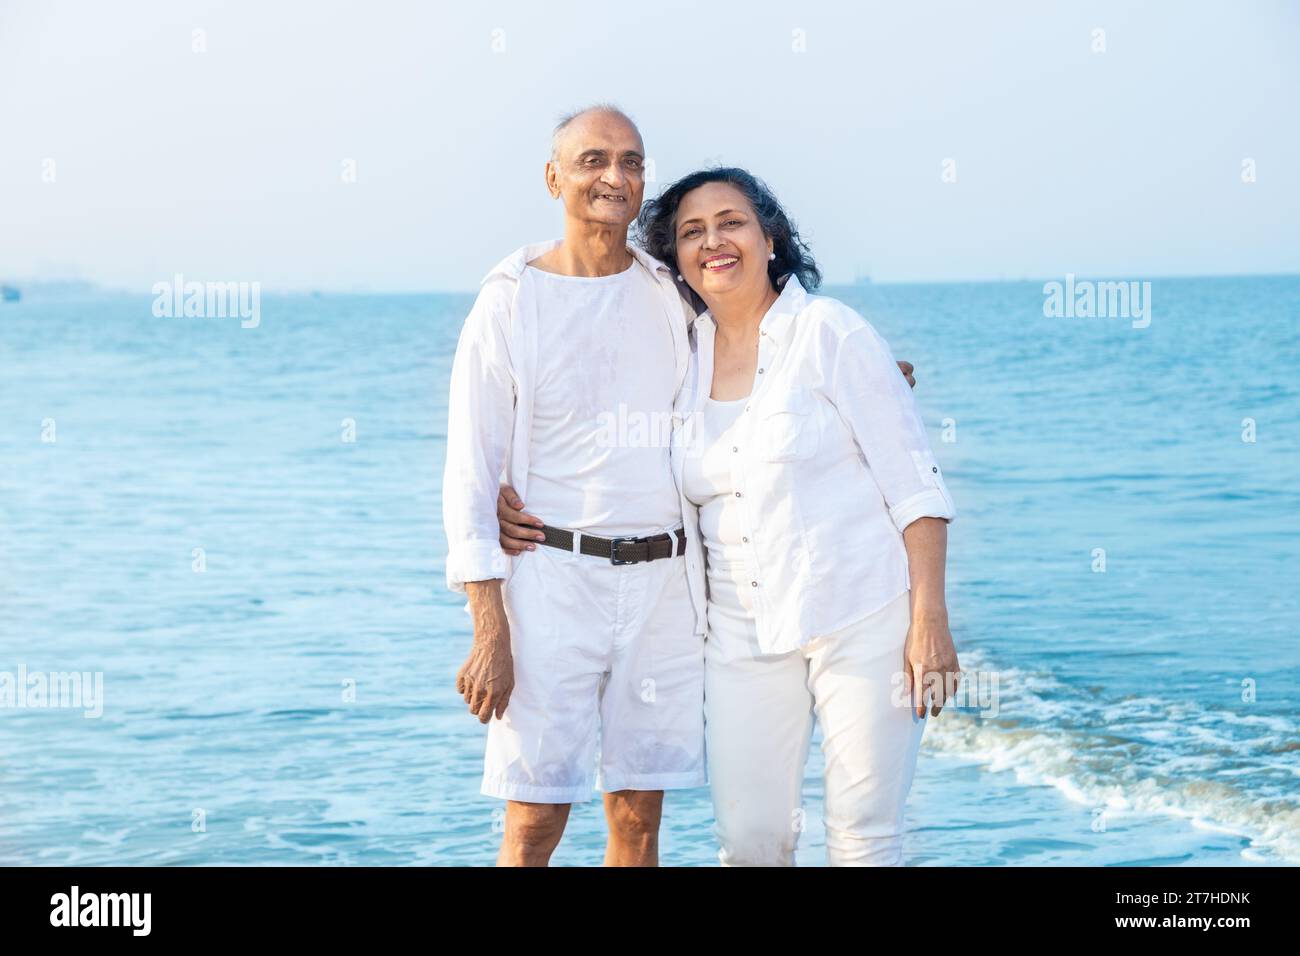 Happy senior indian couple wearing white cloths enjoying summer vacation, holiday at beach. Stock Photo